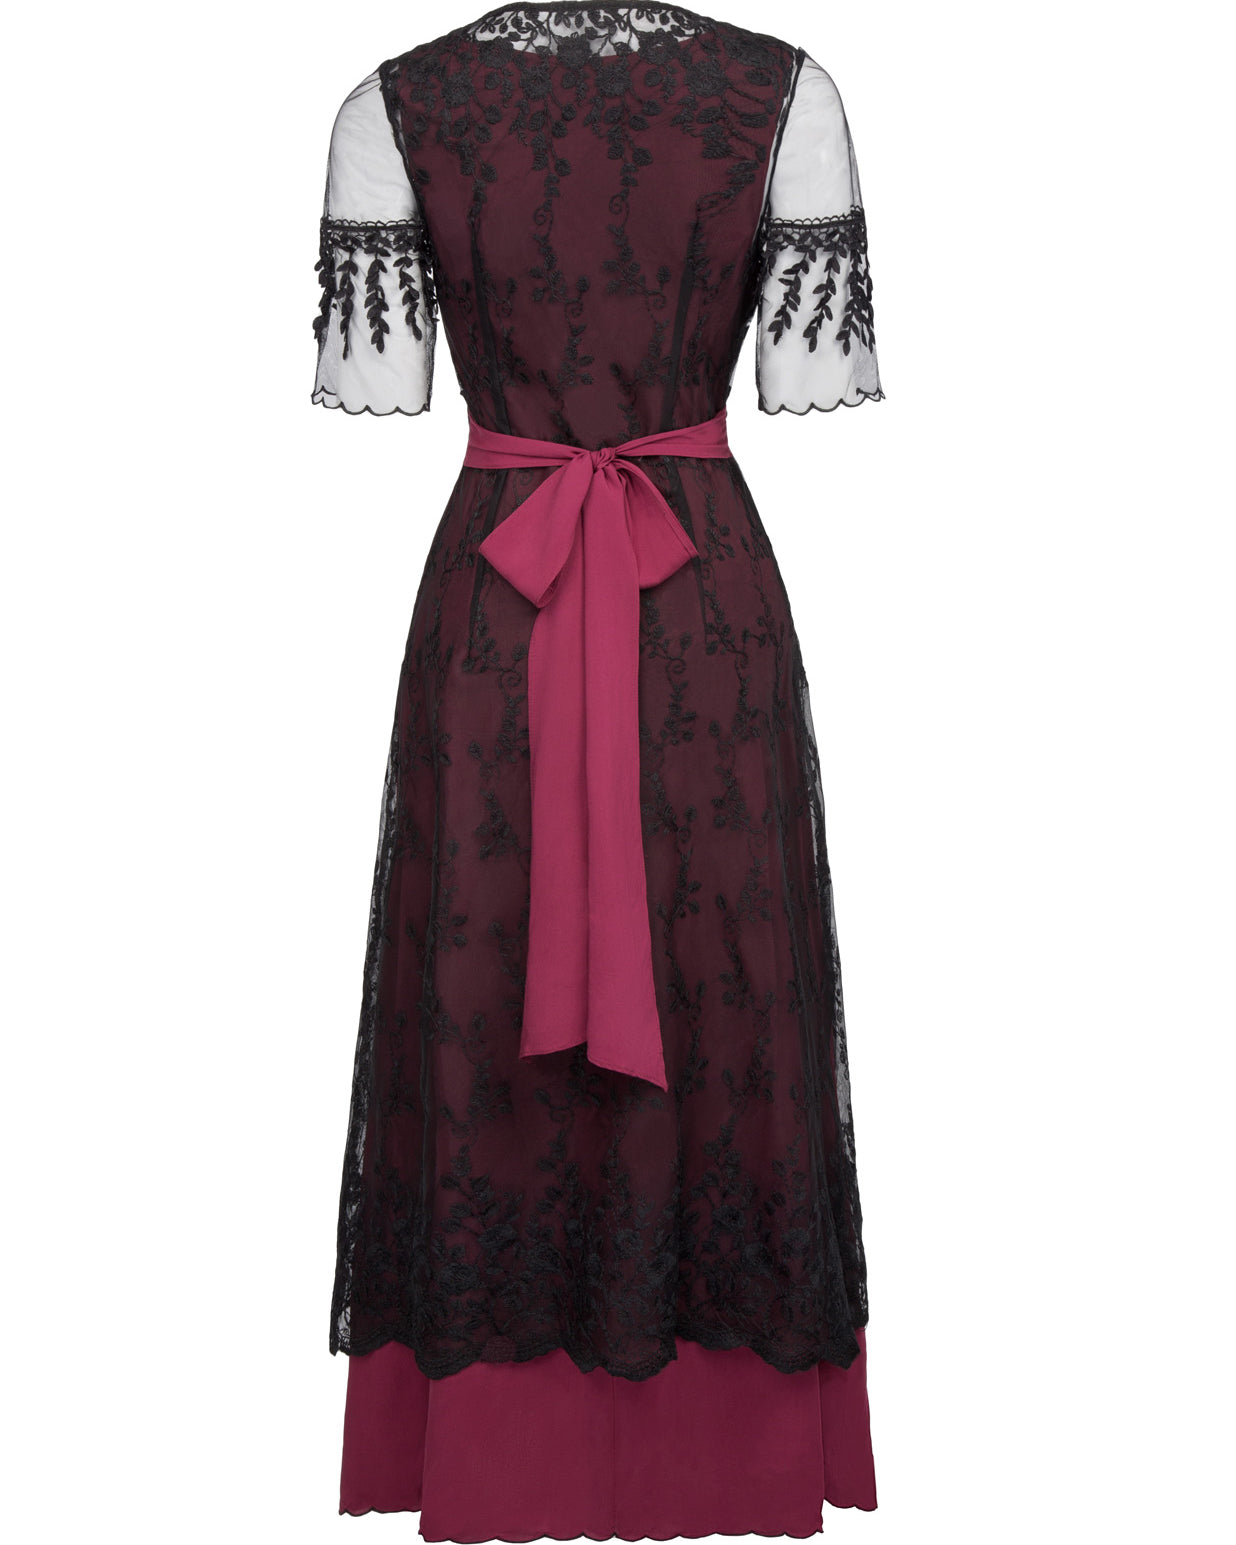 Steampunk Victorian Titanic Maxi Dress Tea Party Gown Antique Dress - Belle Poque Offcial